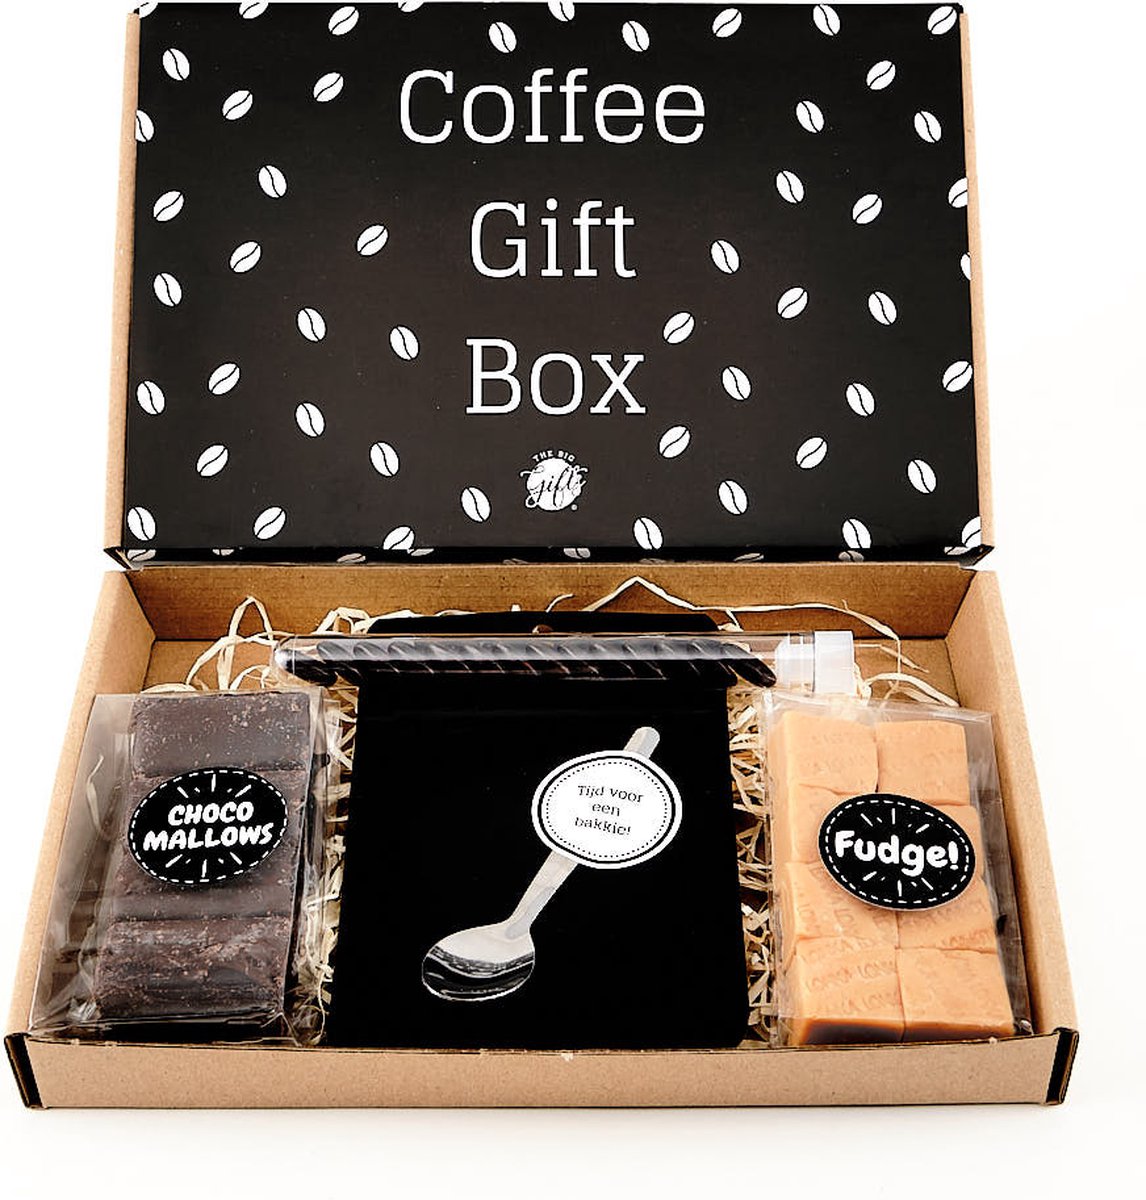 Brievenbuspakket coffee gift box - Cadeau - KOFFIE - Brievenbus pakket - The Big Gifts - cadeau voor man - cadeau voor vrouw - giftset - chocolade - eten - vaderdag - moederdag - pasen - snoep - cadeaubox - Merkloos